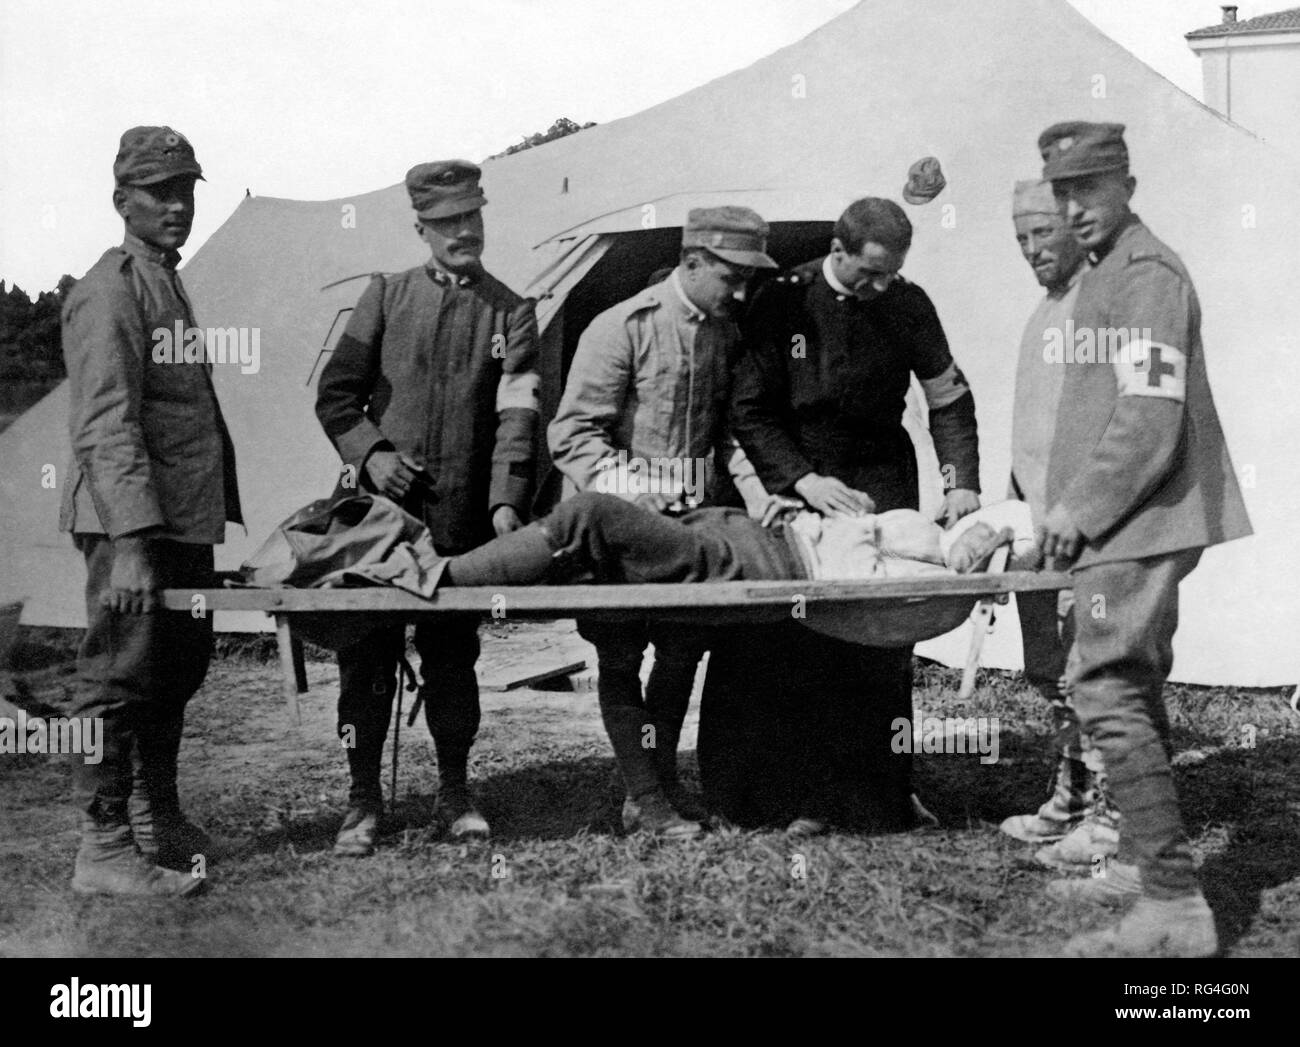 La primera guerra mundial, el hospital de campaña, 1915-18 Foto de stock